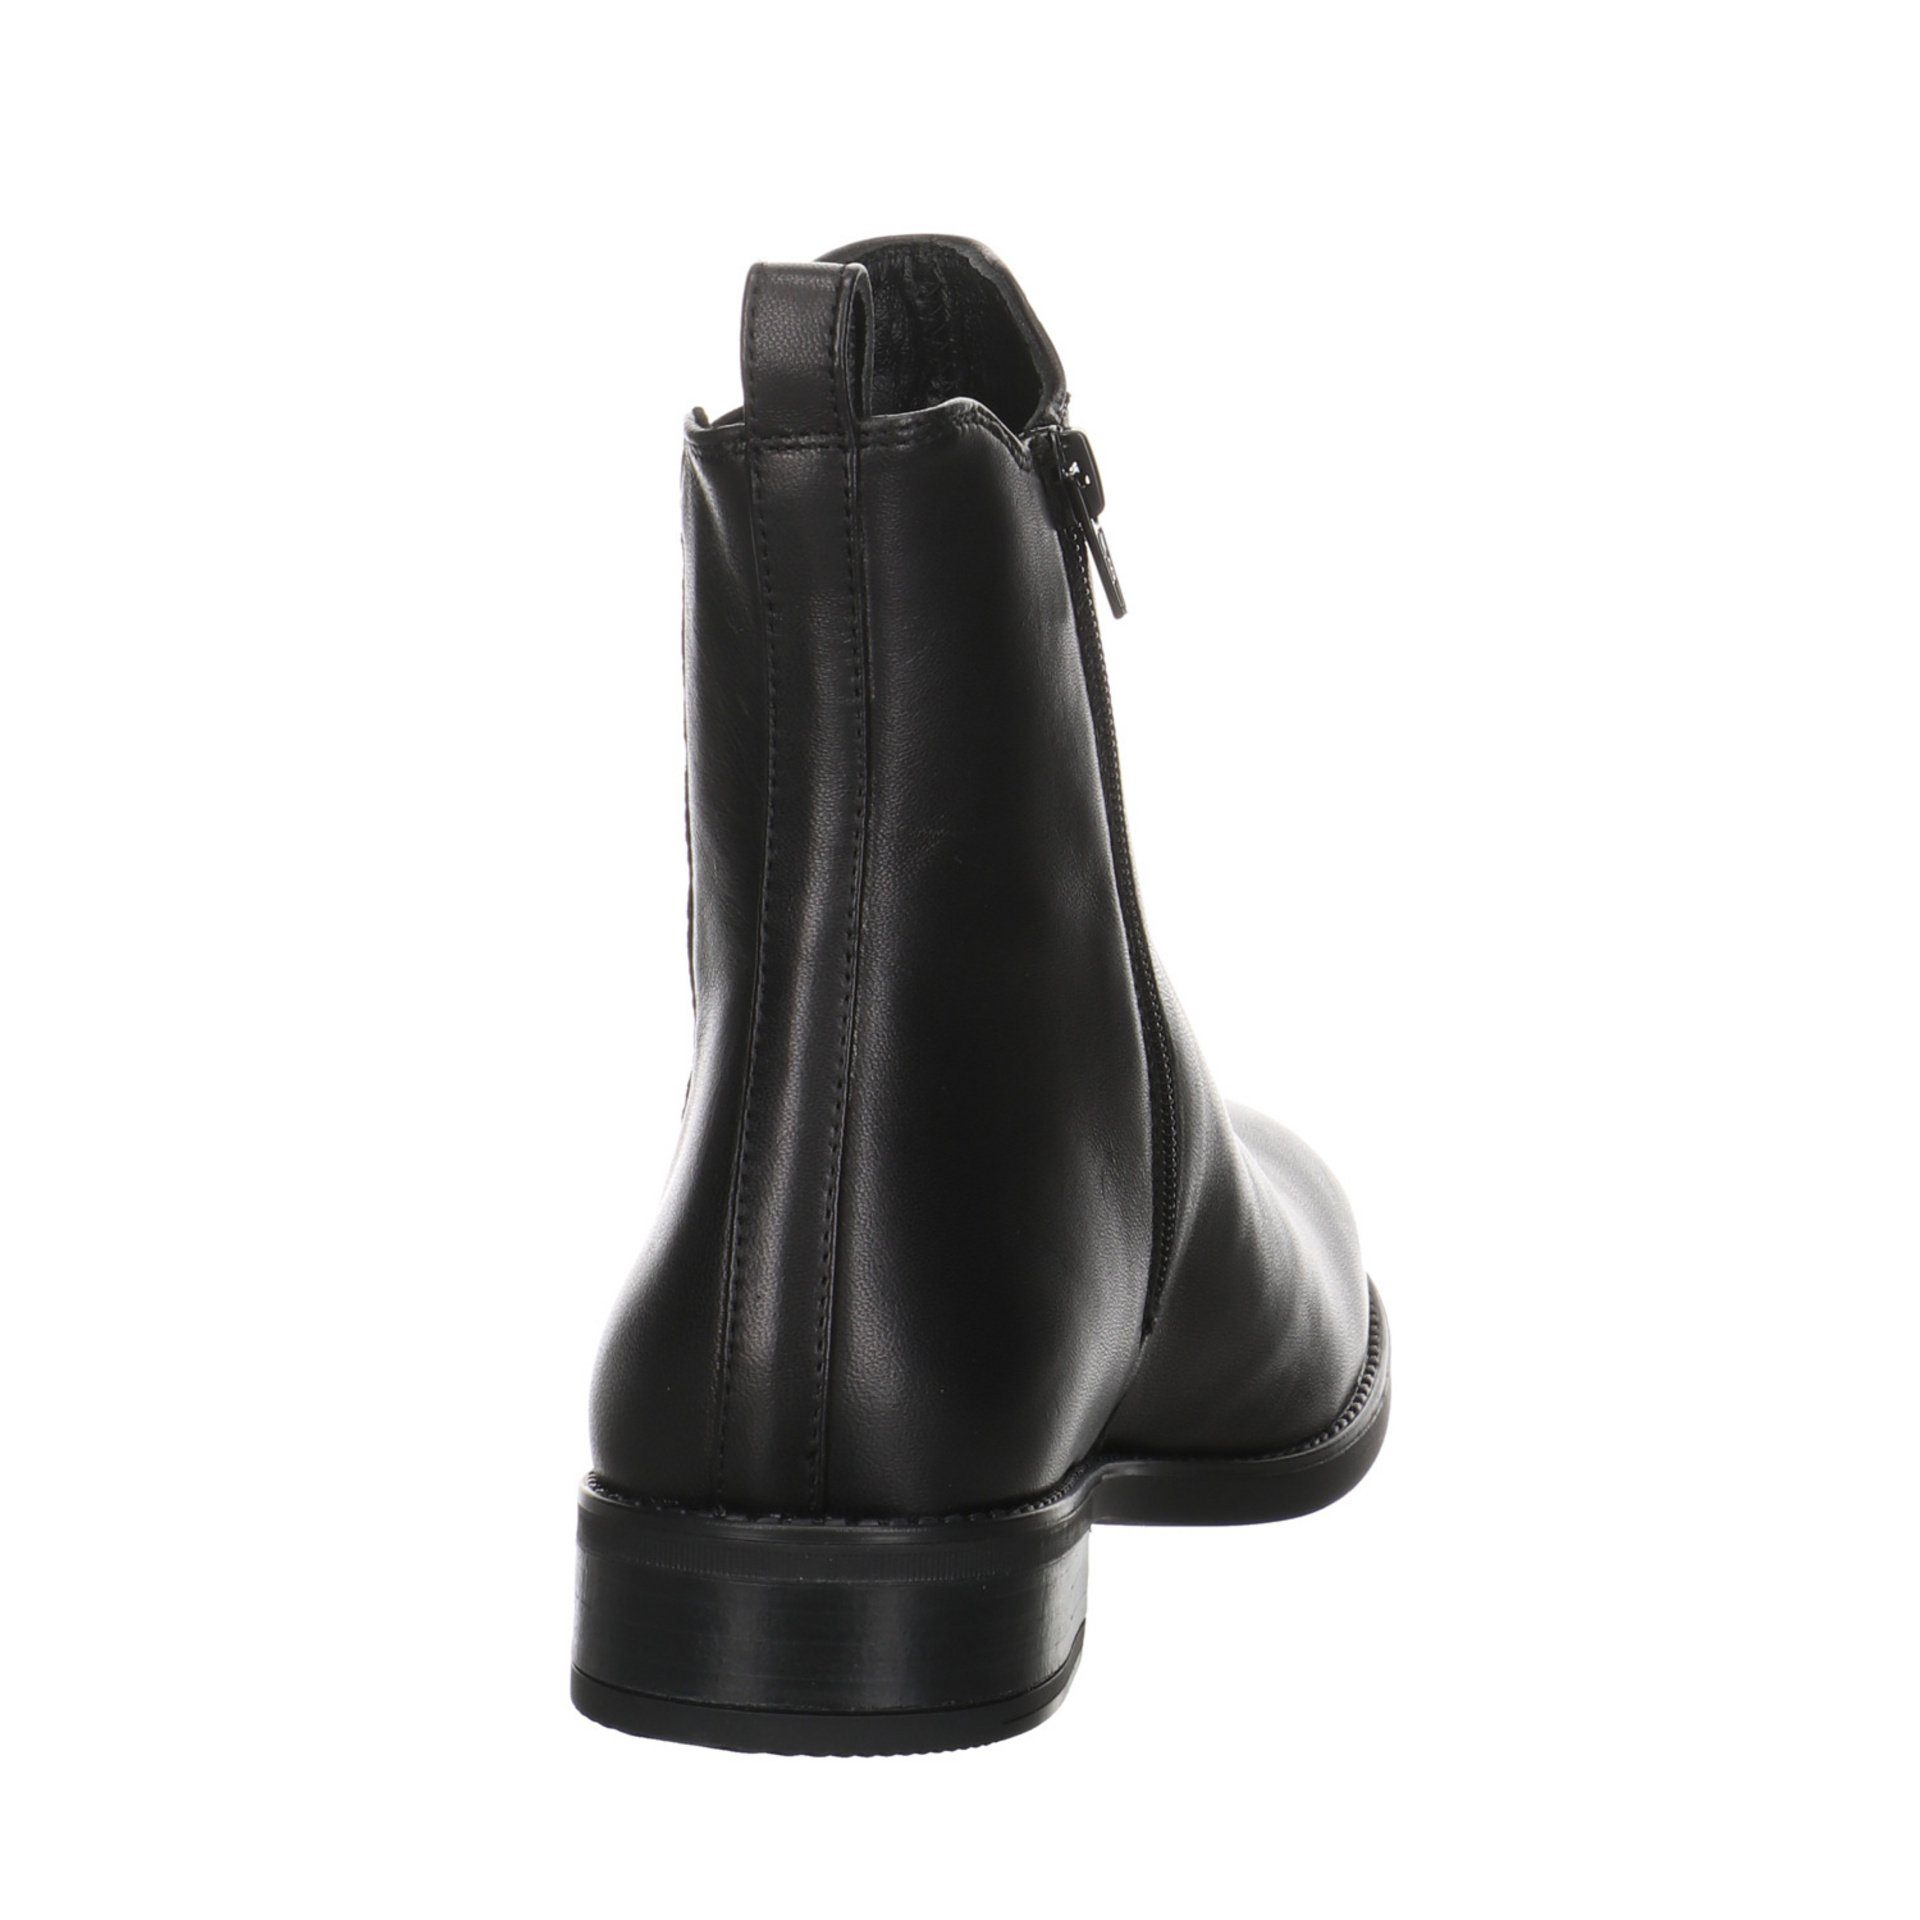 Leder-/Textilkombination Stiefelette Schuhe Stiefeletten Chelsea Unisa black Boots Barty Damen